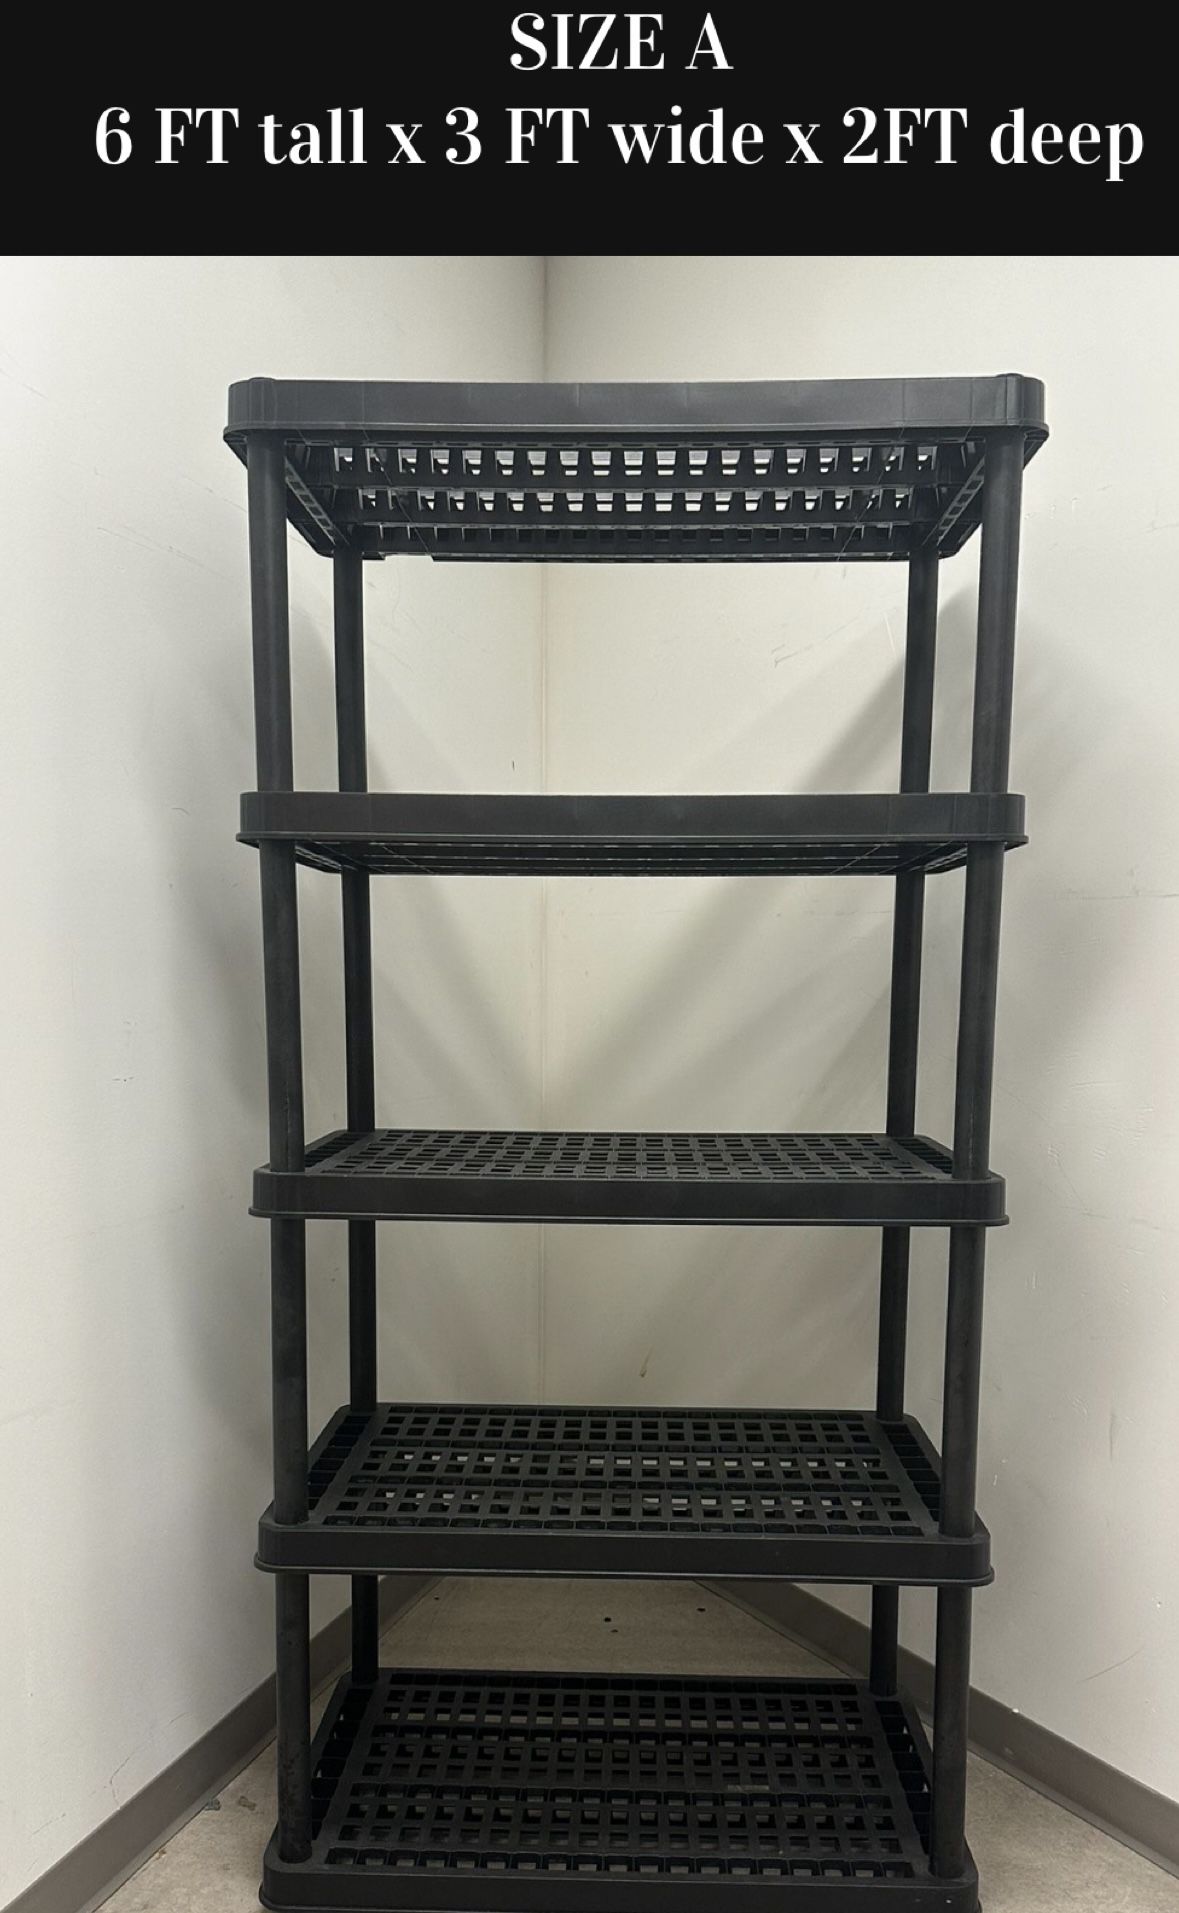 6 FT, 5 Tier Large Plastic Shelves Perfect For Garage Or Storage-Only 2 Sets Left